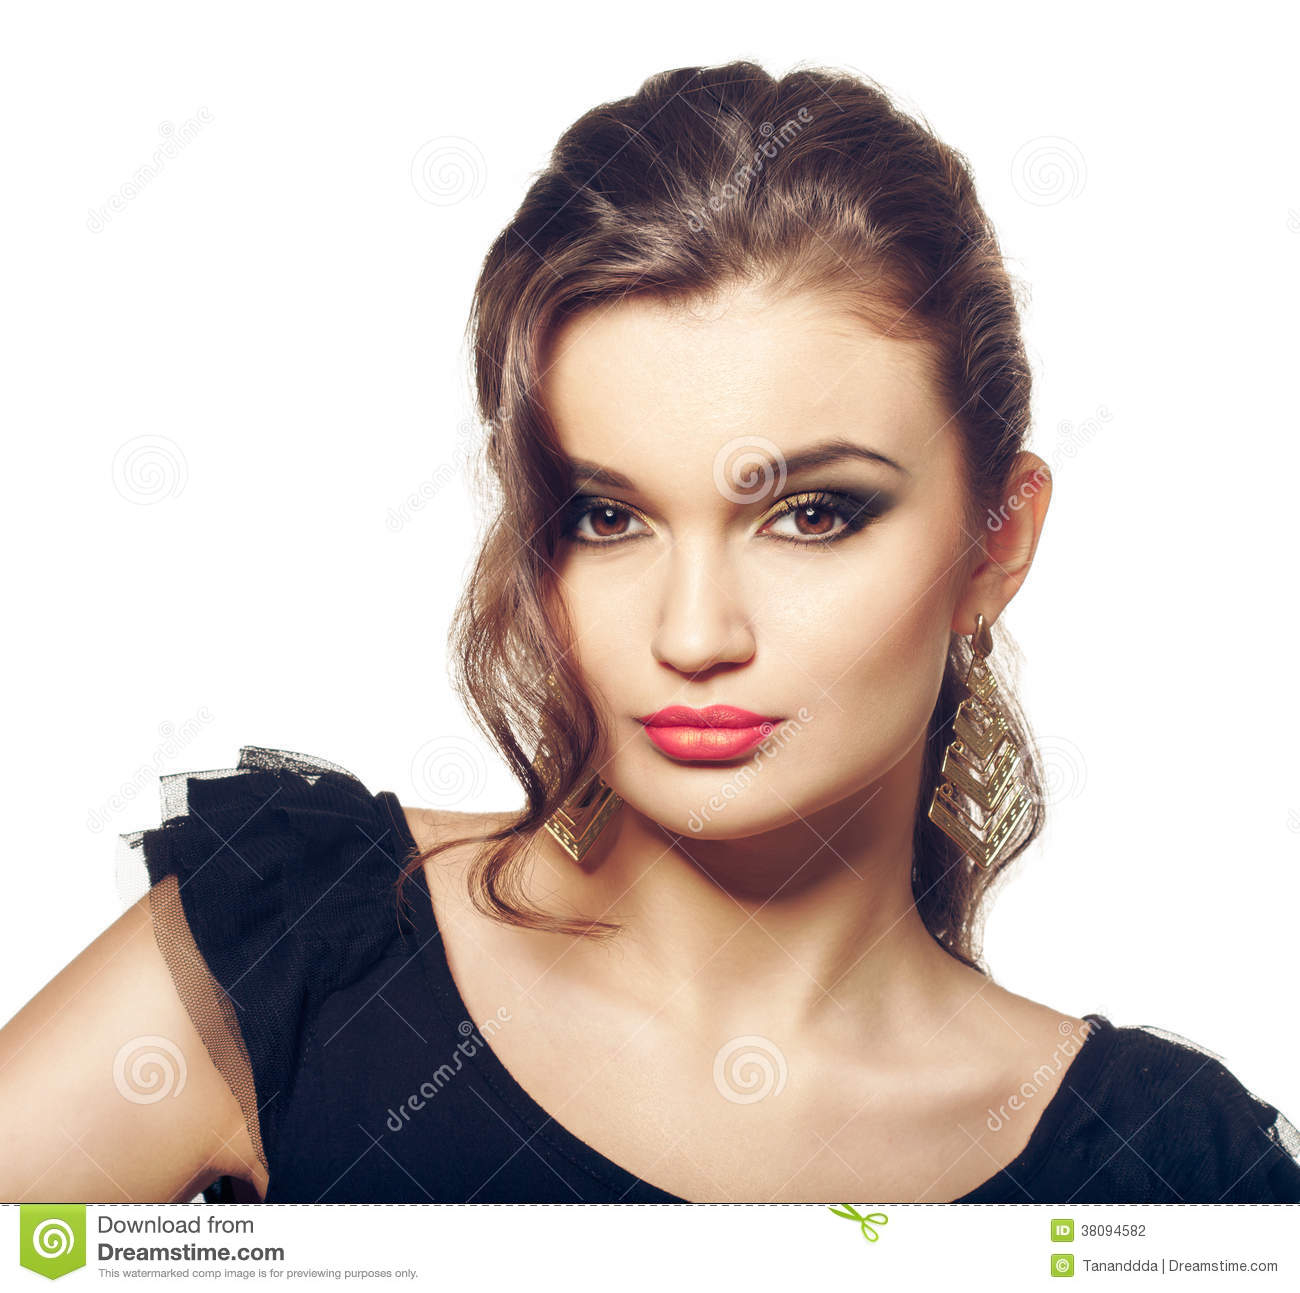 Eye Makeup For Black Dress Fashion Girl Portrait In Black Dress Stock Photo Image Of Girl